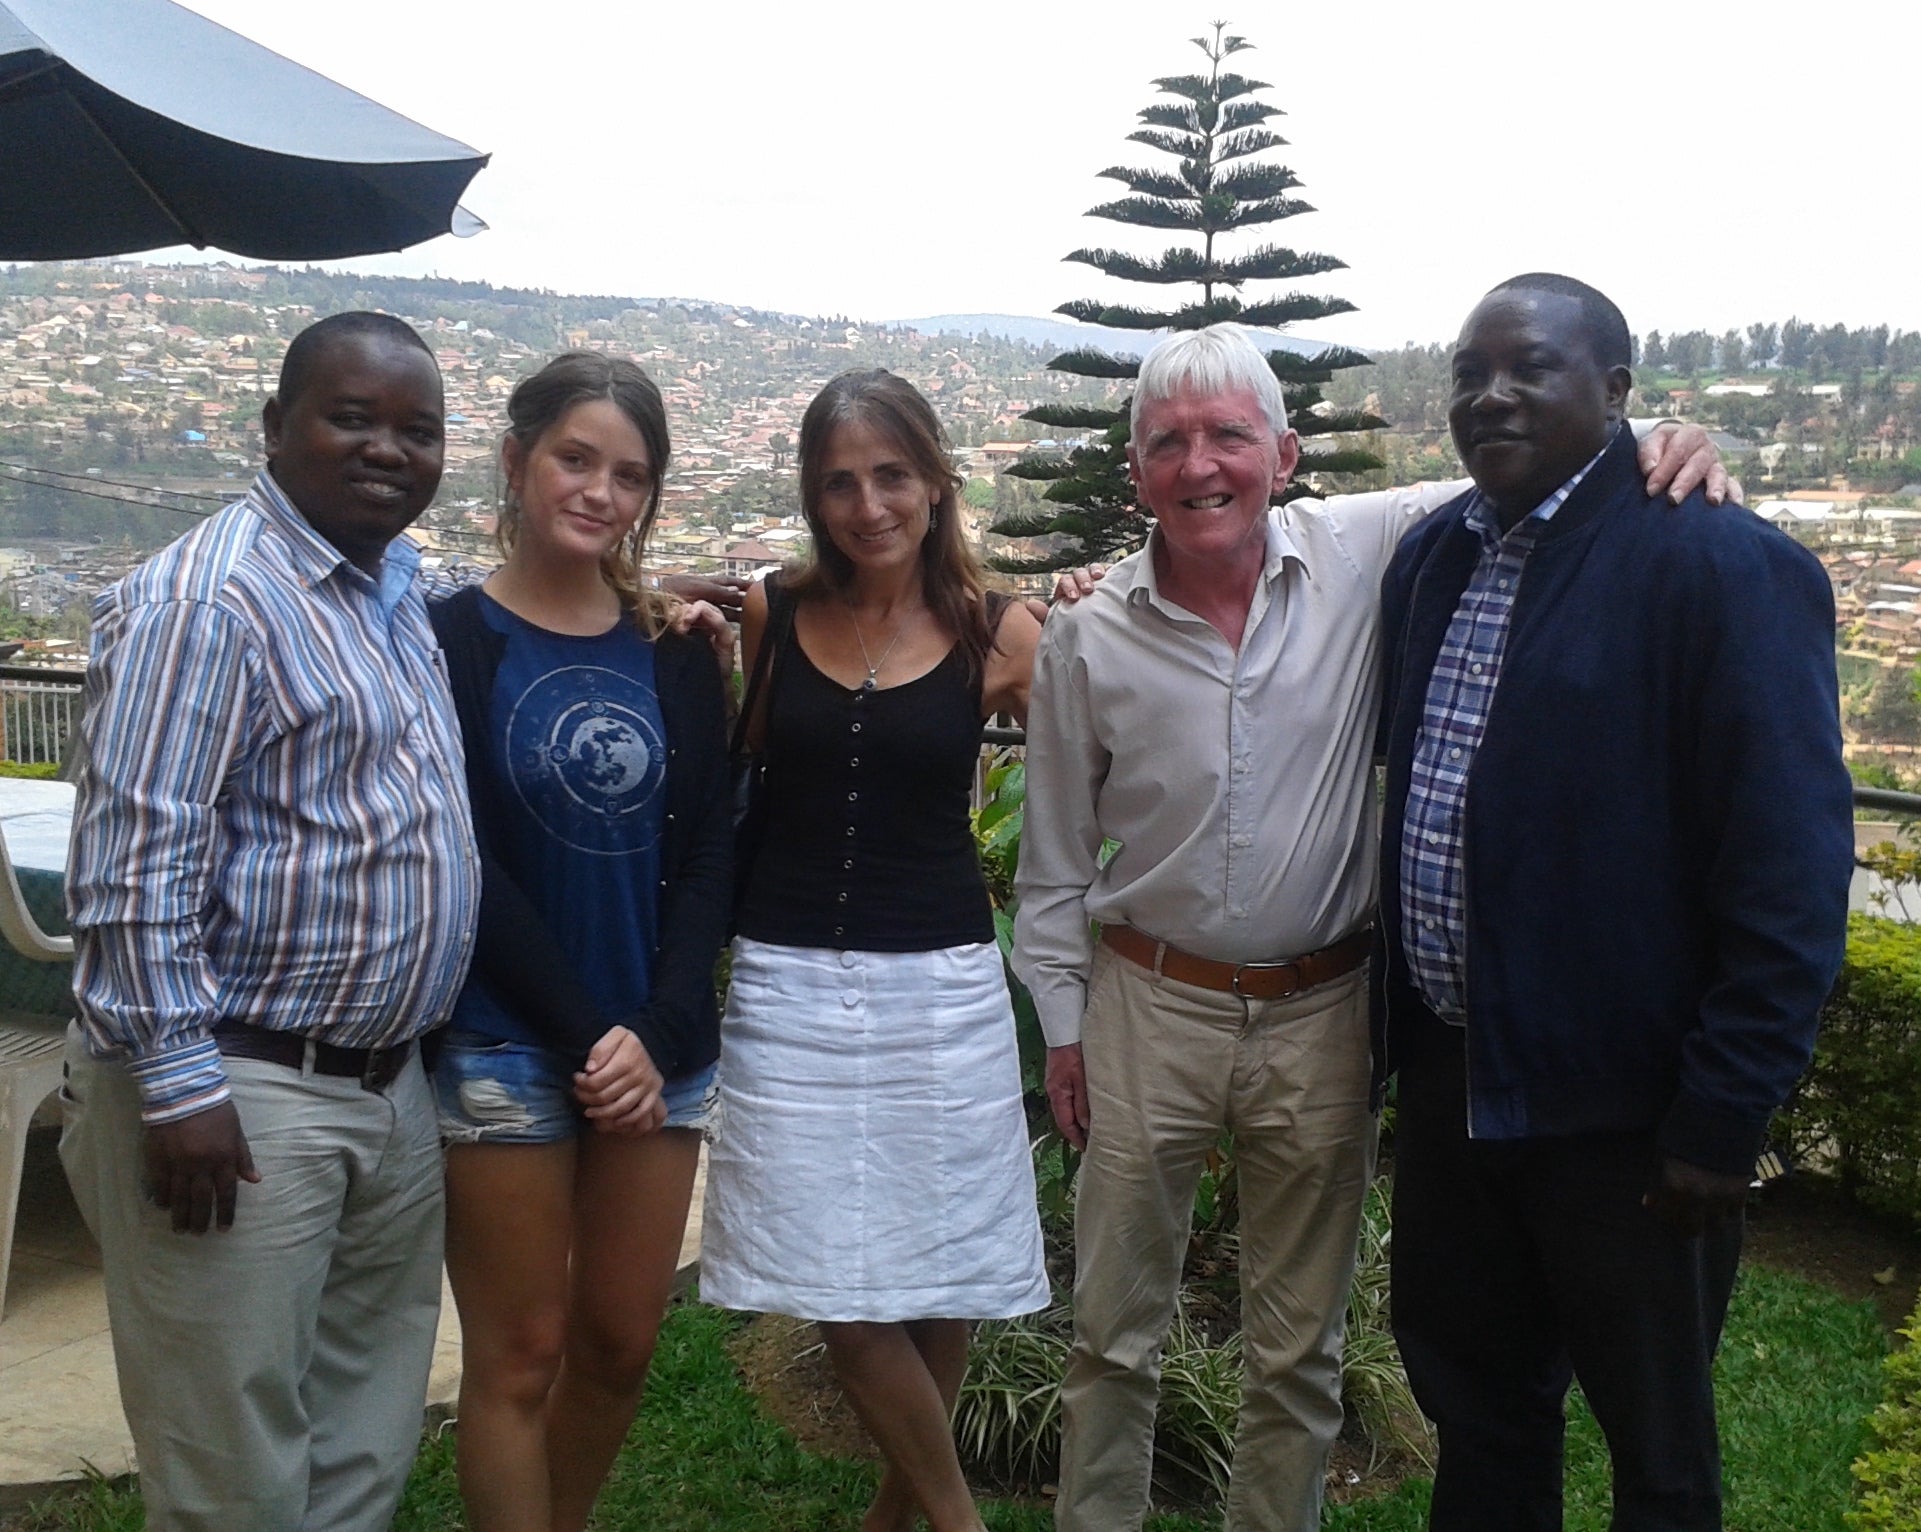 From right to left: JMV Gatabazi MP, Tim Murphy, Wendy Murphy, Ellie Murphy, and a Rwandan official